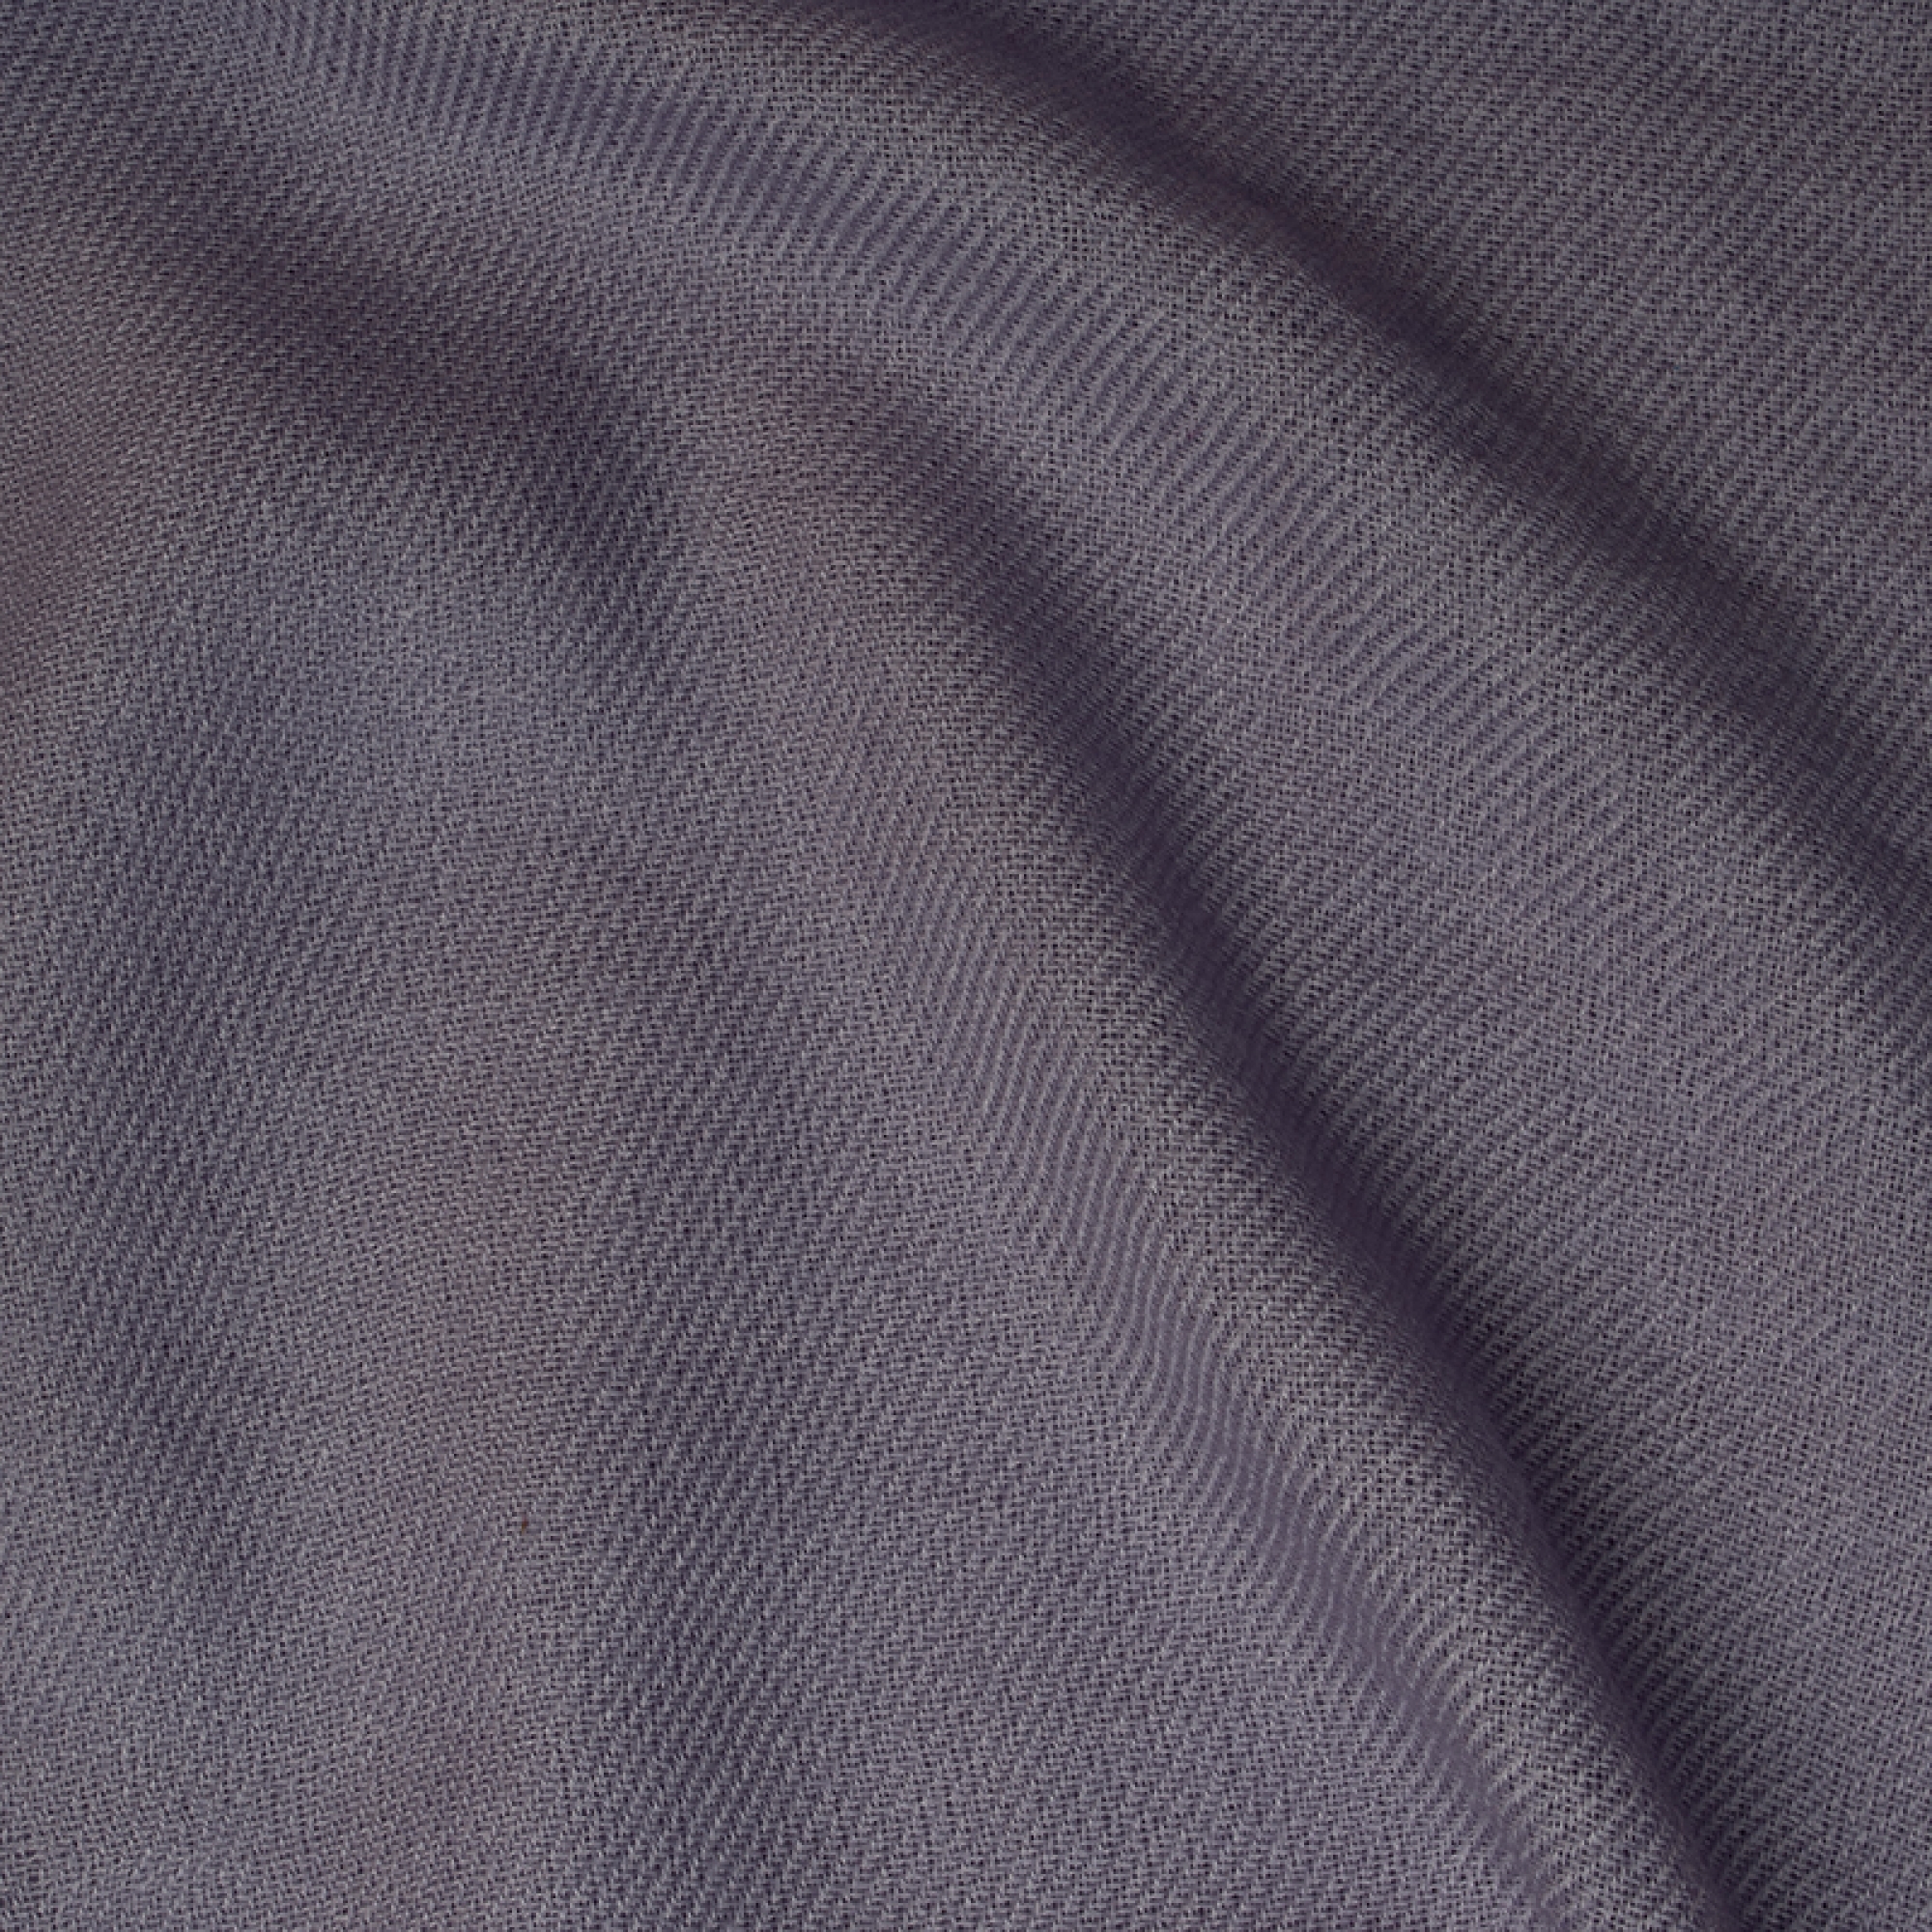 Cashmere accessories blanket toodoo plain s 140 x 200 heirloom lilac 140 x 200 cm